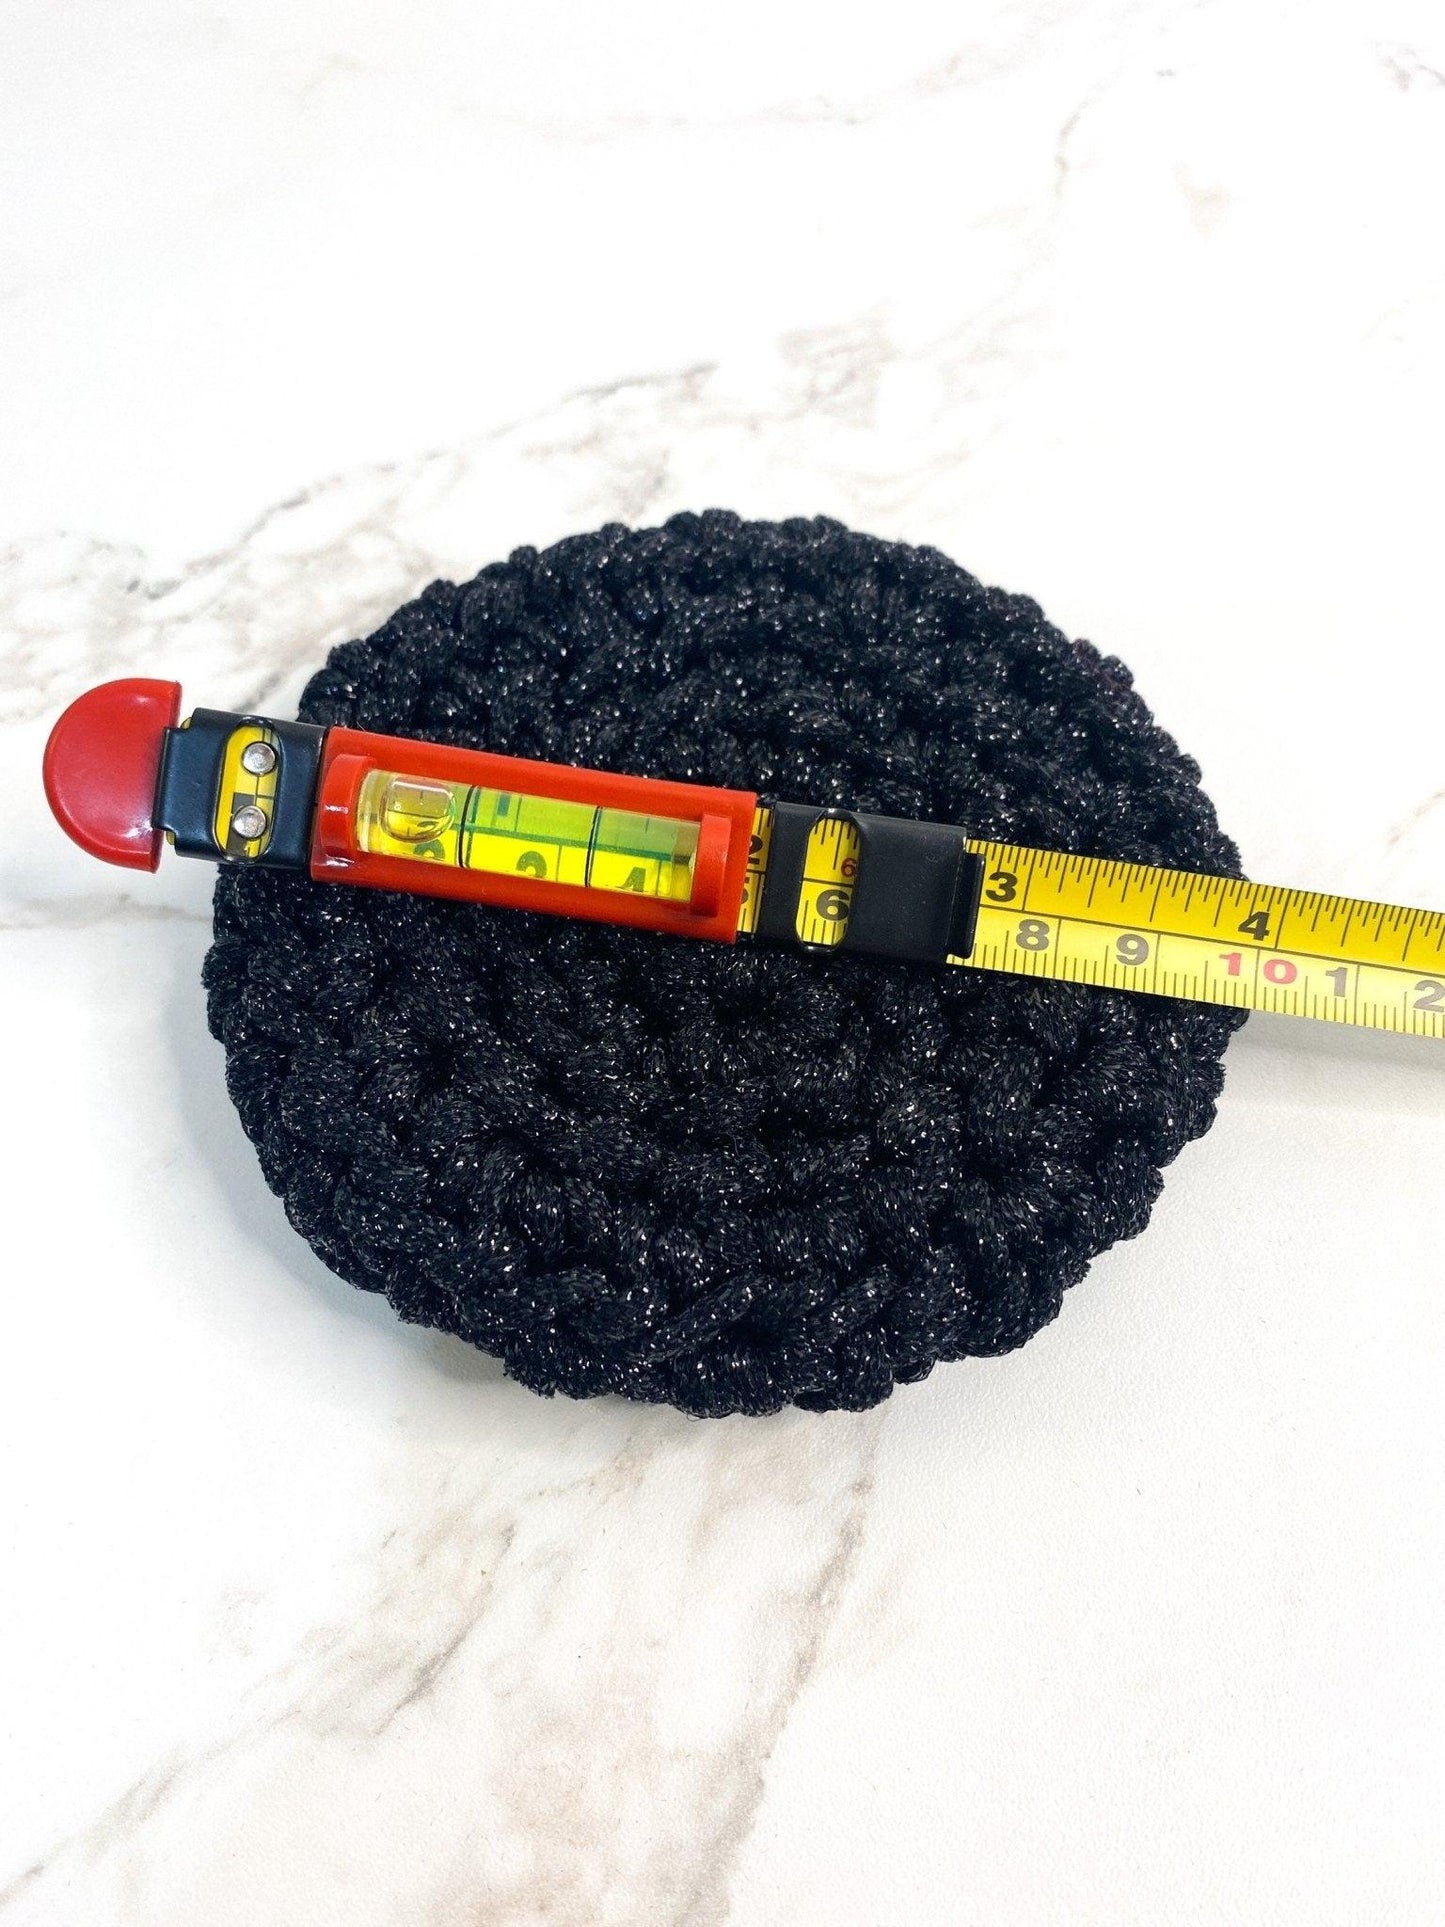 Handmade Black Crochet Dish Scrubby with Yellow Measuring Tape Across it